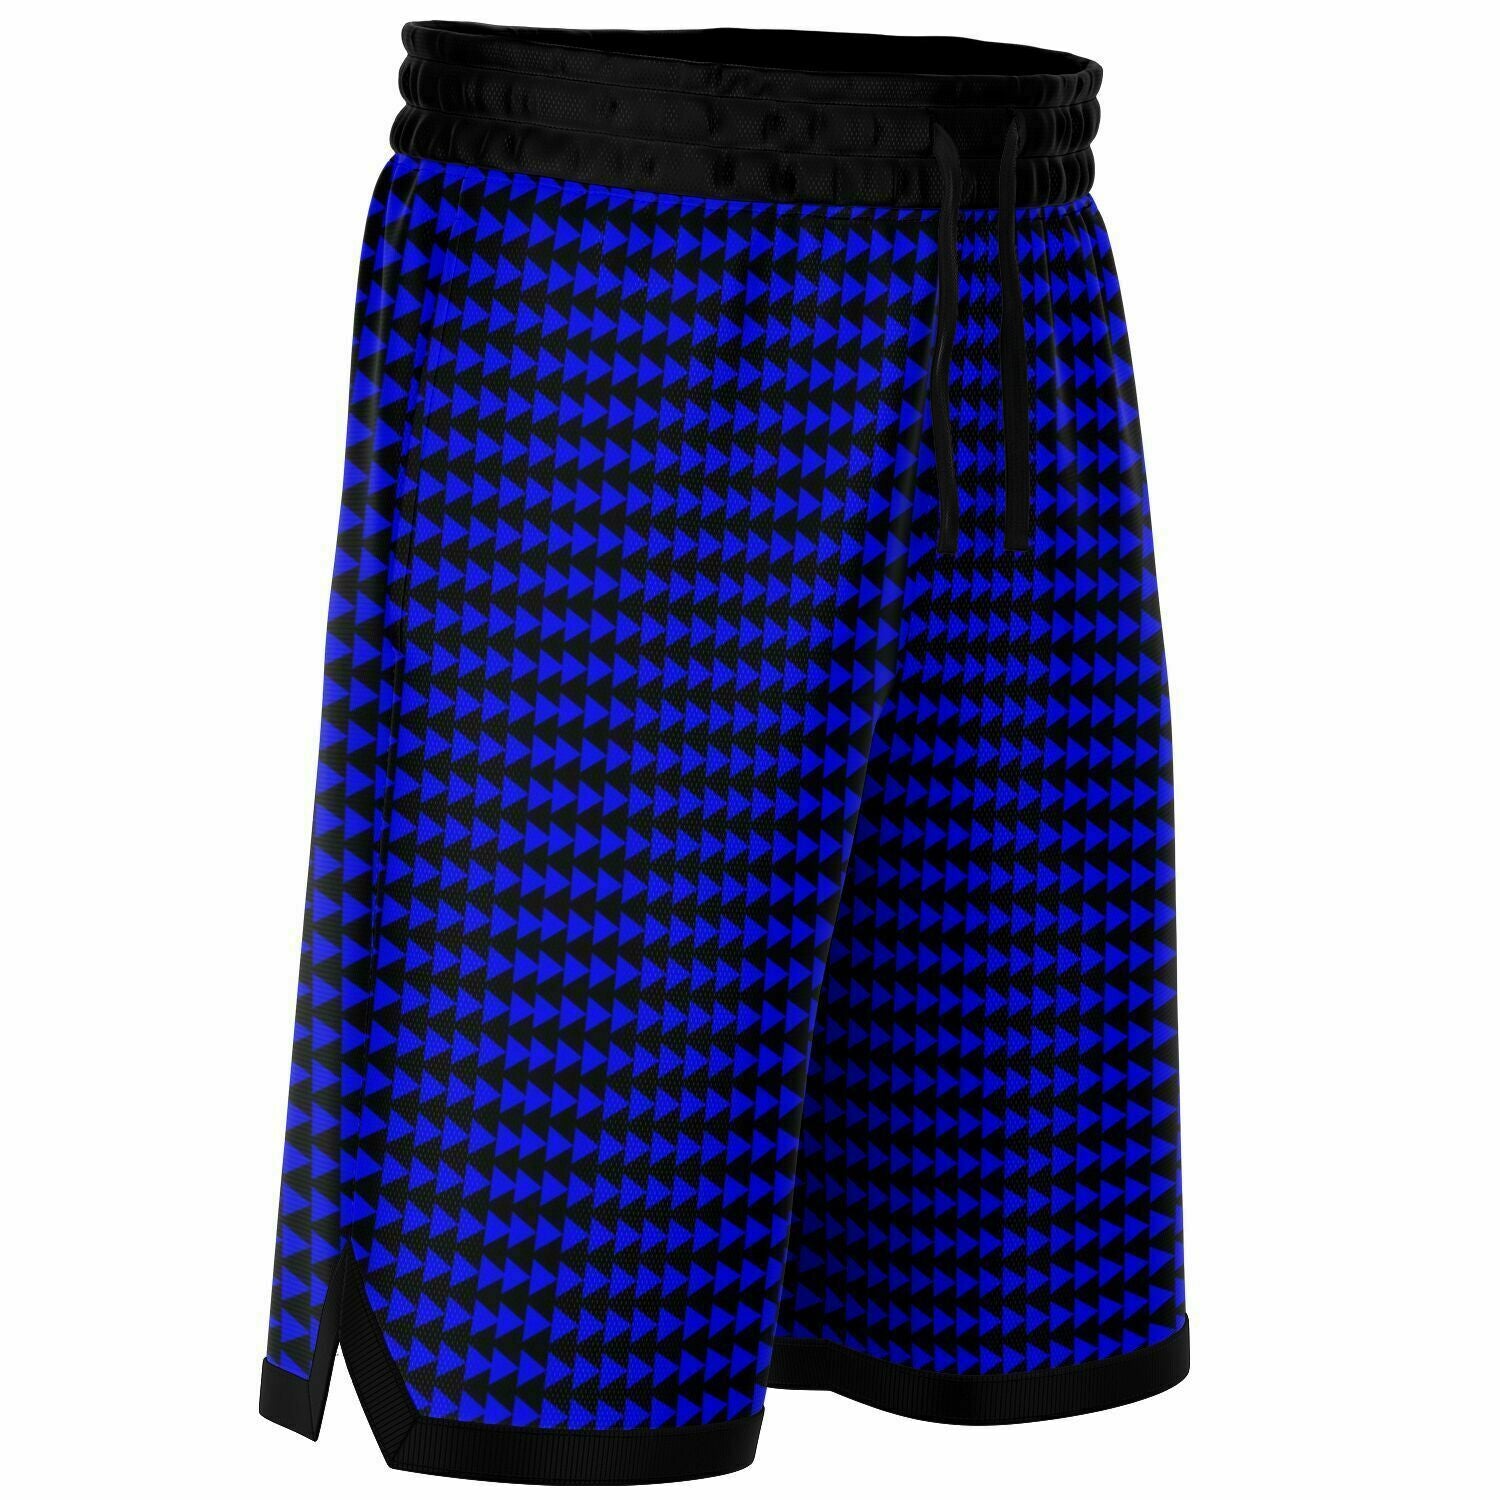 Basketball Shorts With Sturgeon Back Design